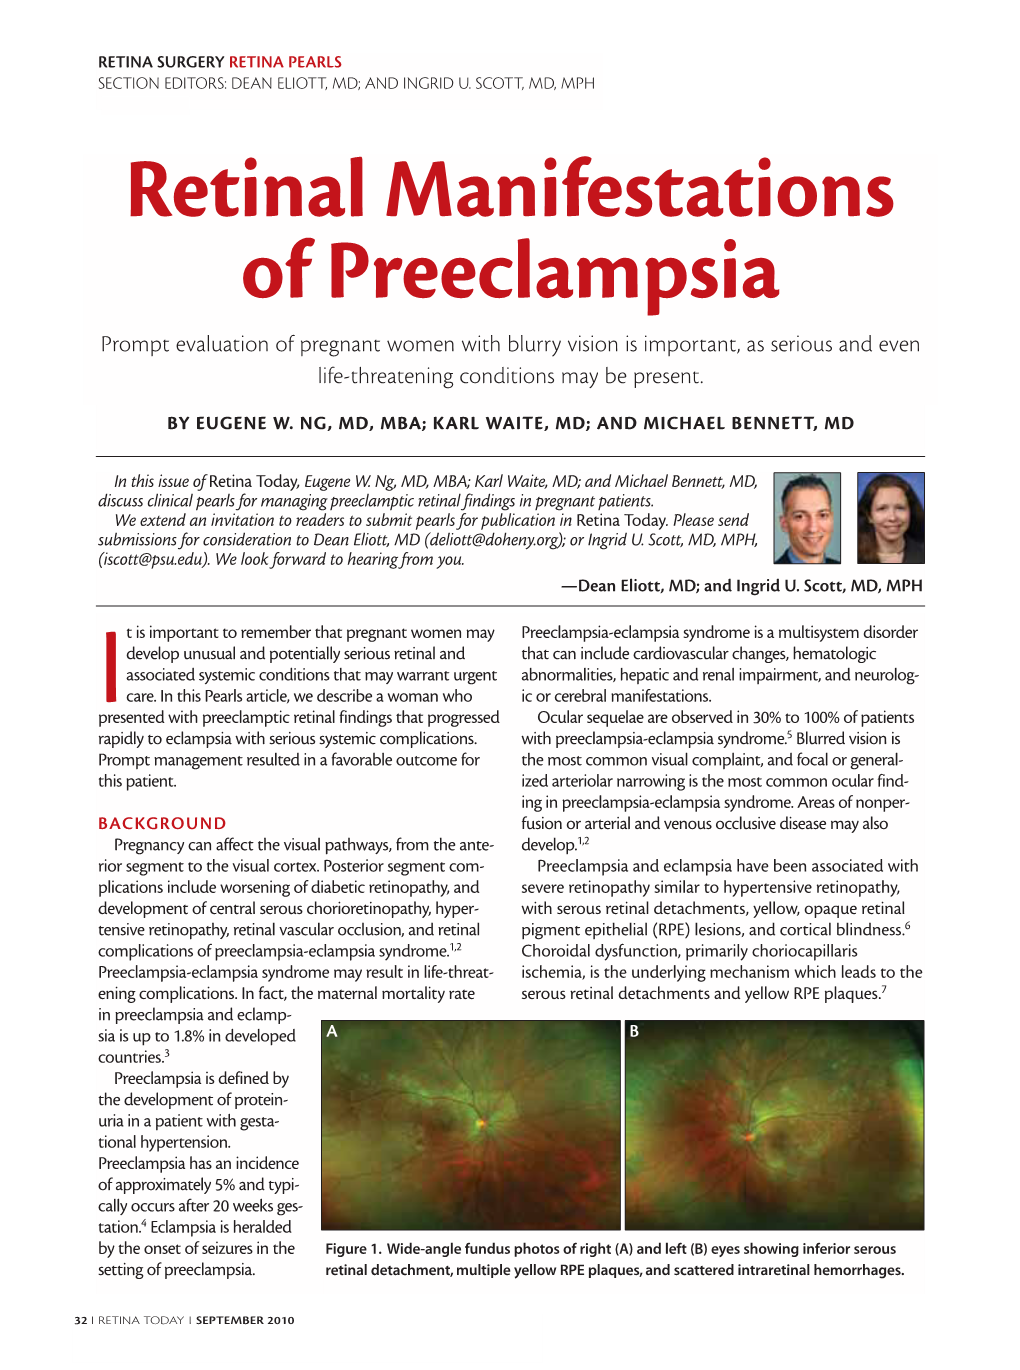 Retinal Manifestations of Preeclampsia